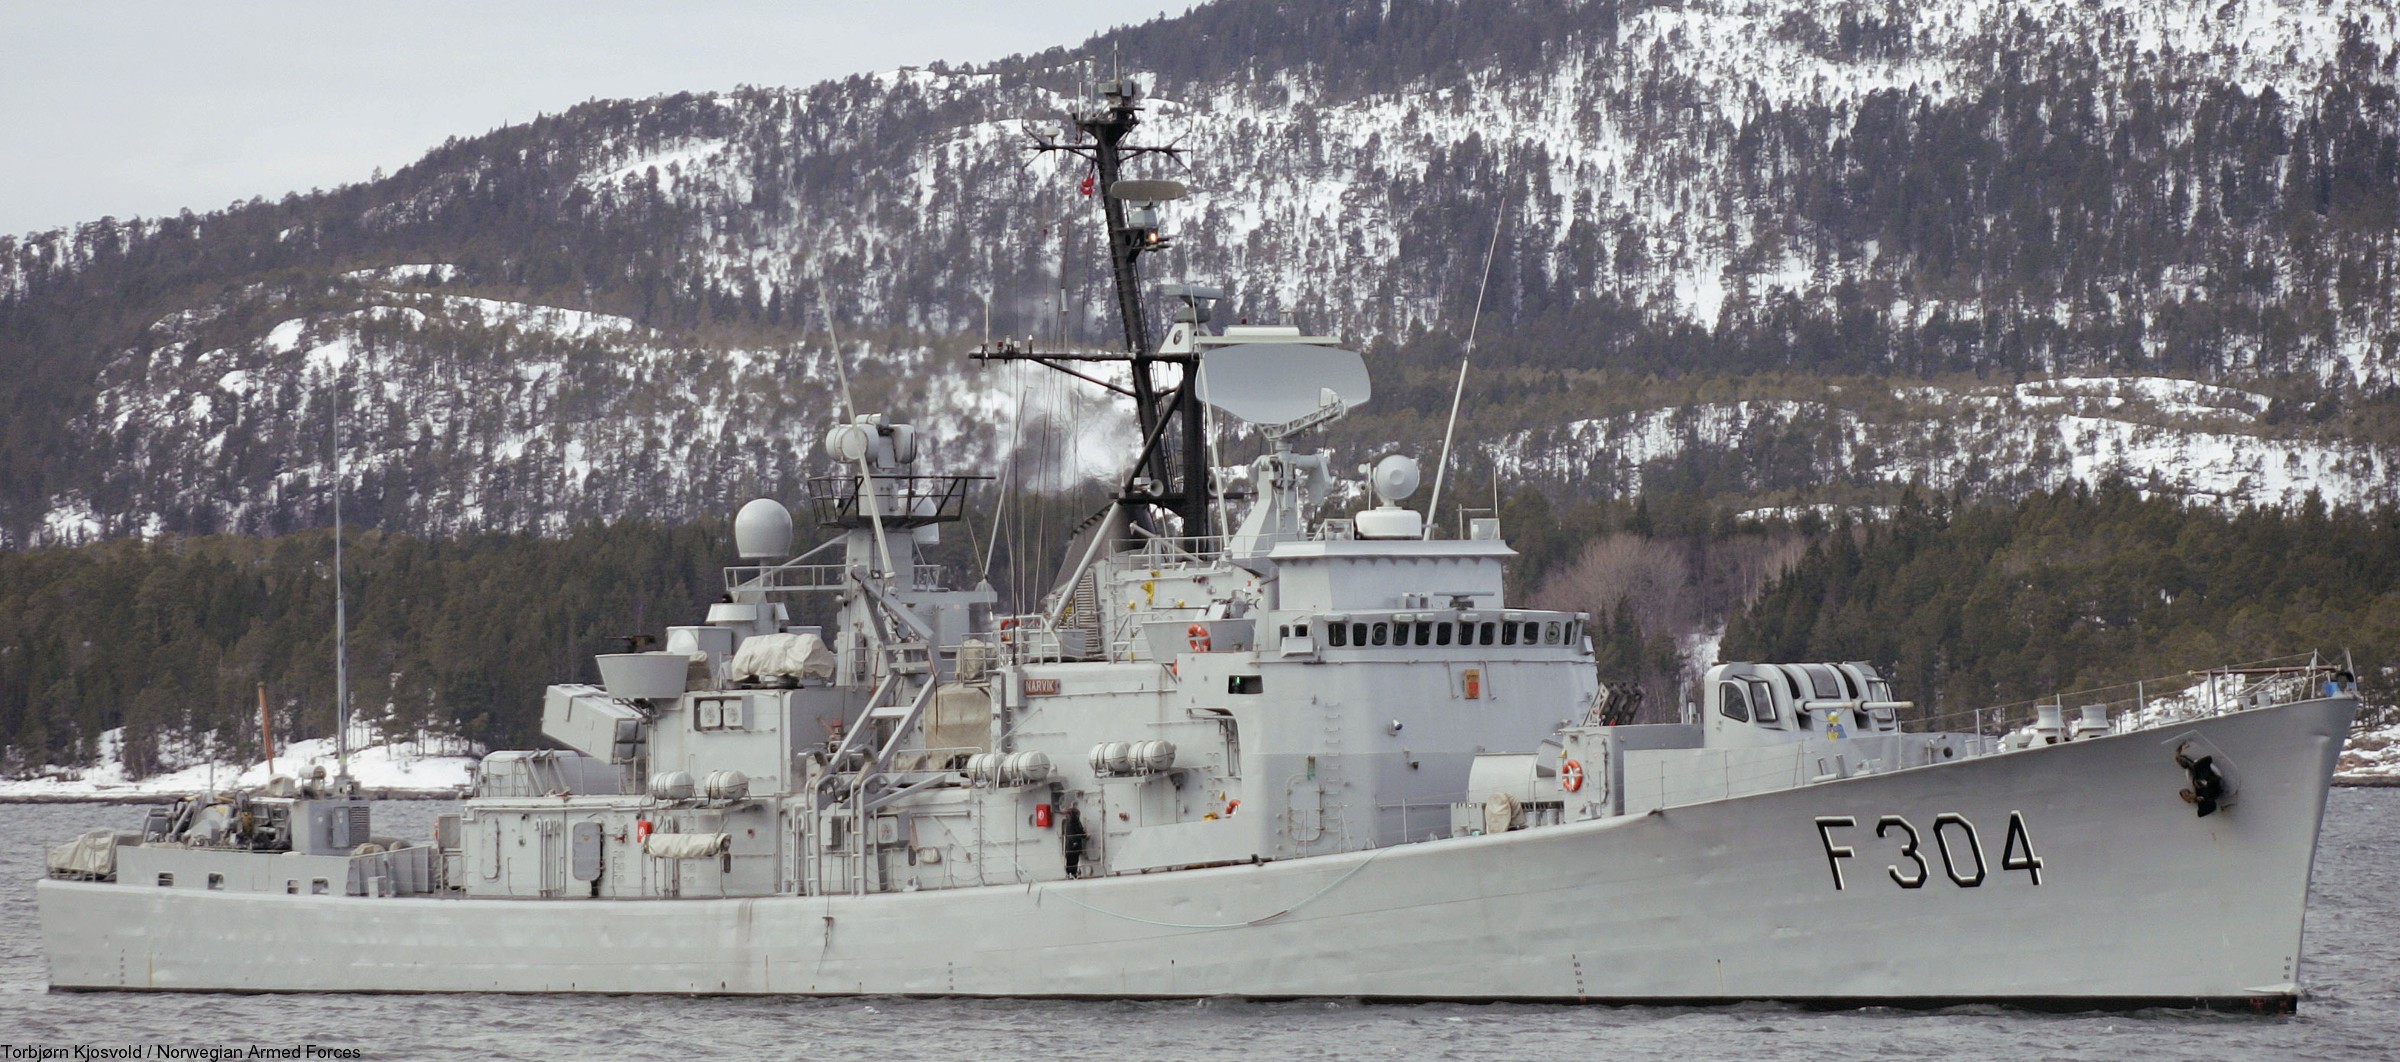 f-304 hnoms narvik knm oslo class frigate royal norwegian navy sjoforsvaret 11